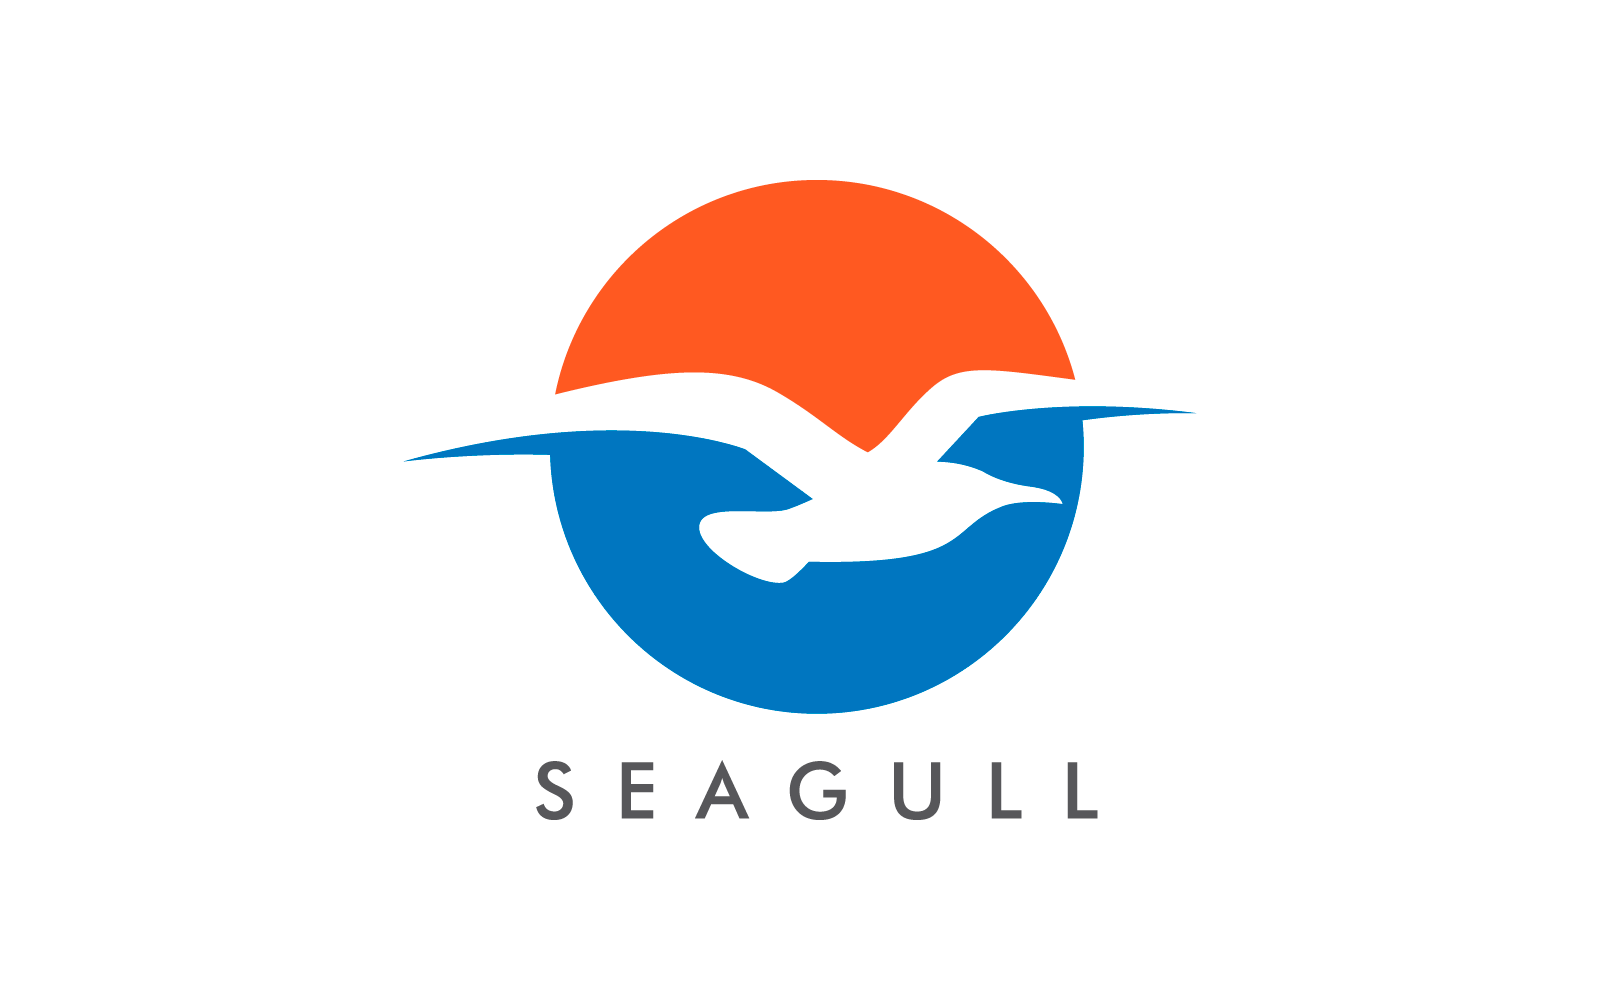 Seagull bird illustration vector flat design template eps 10